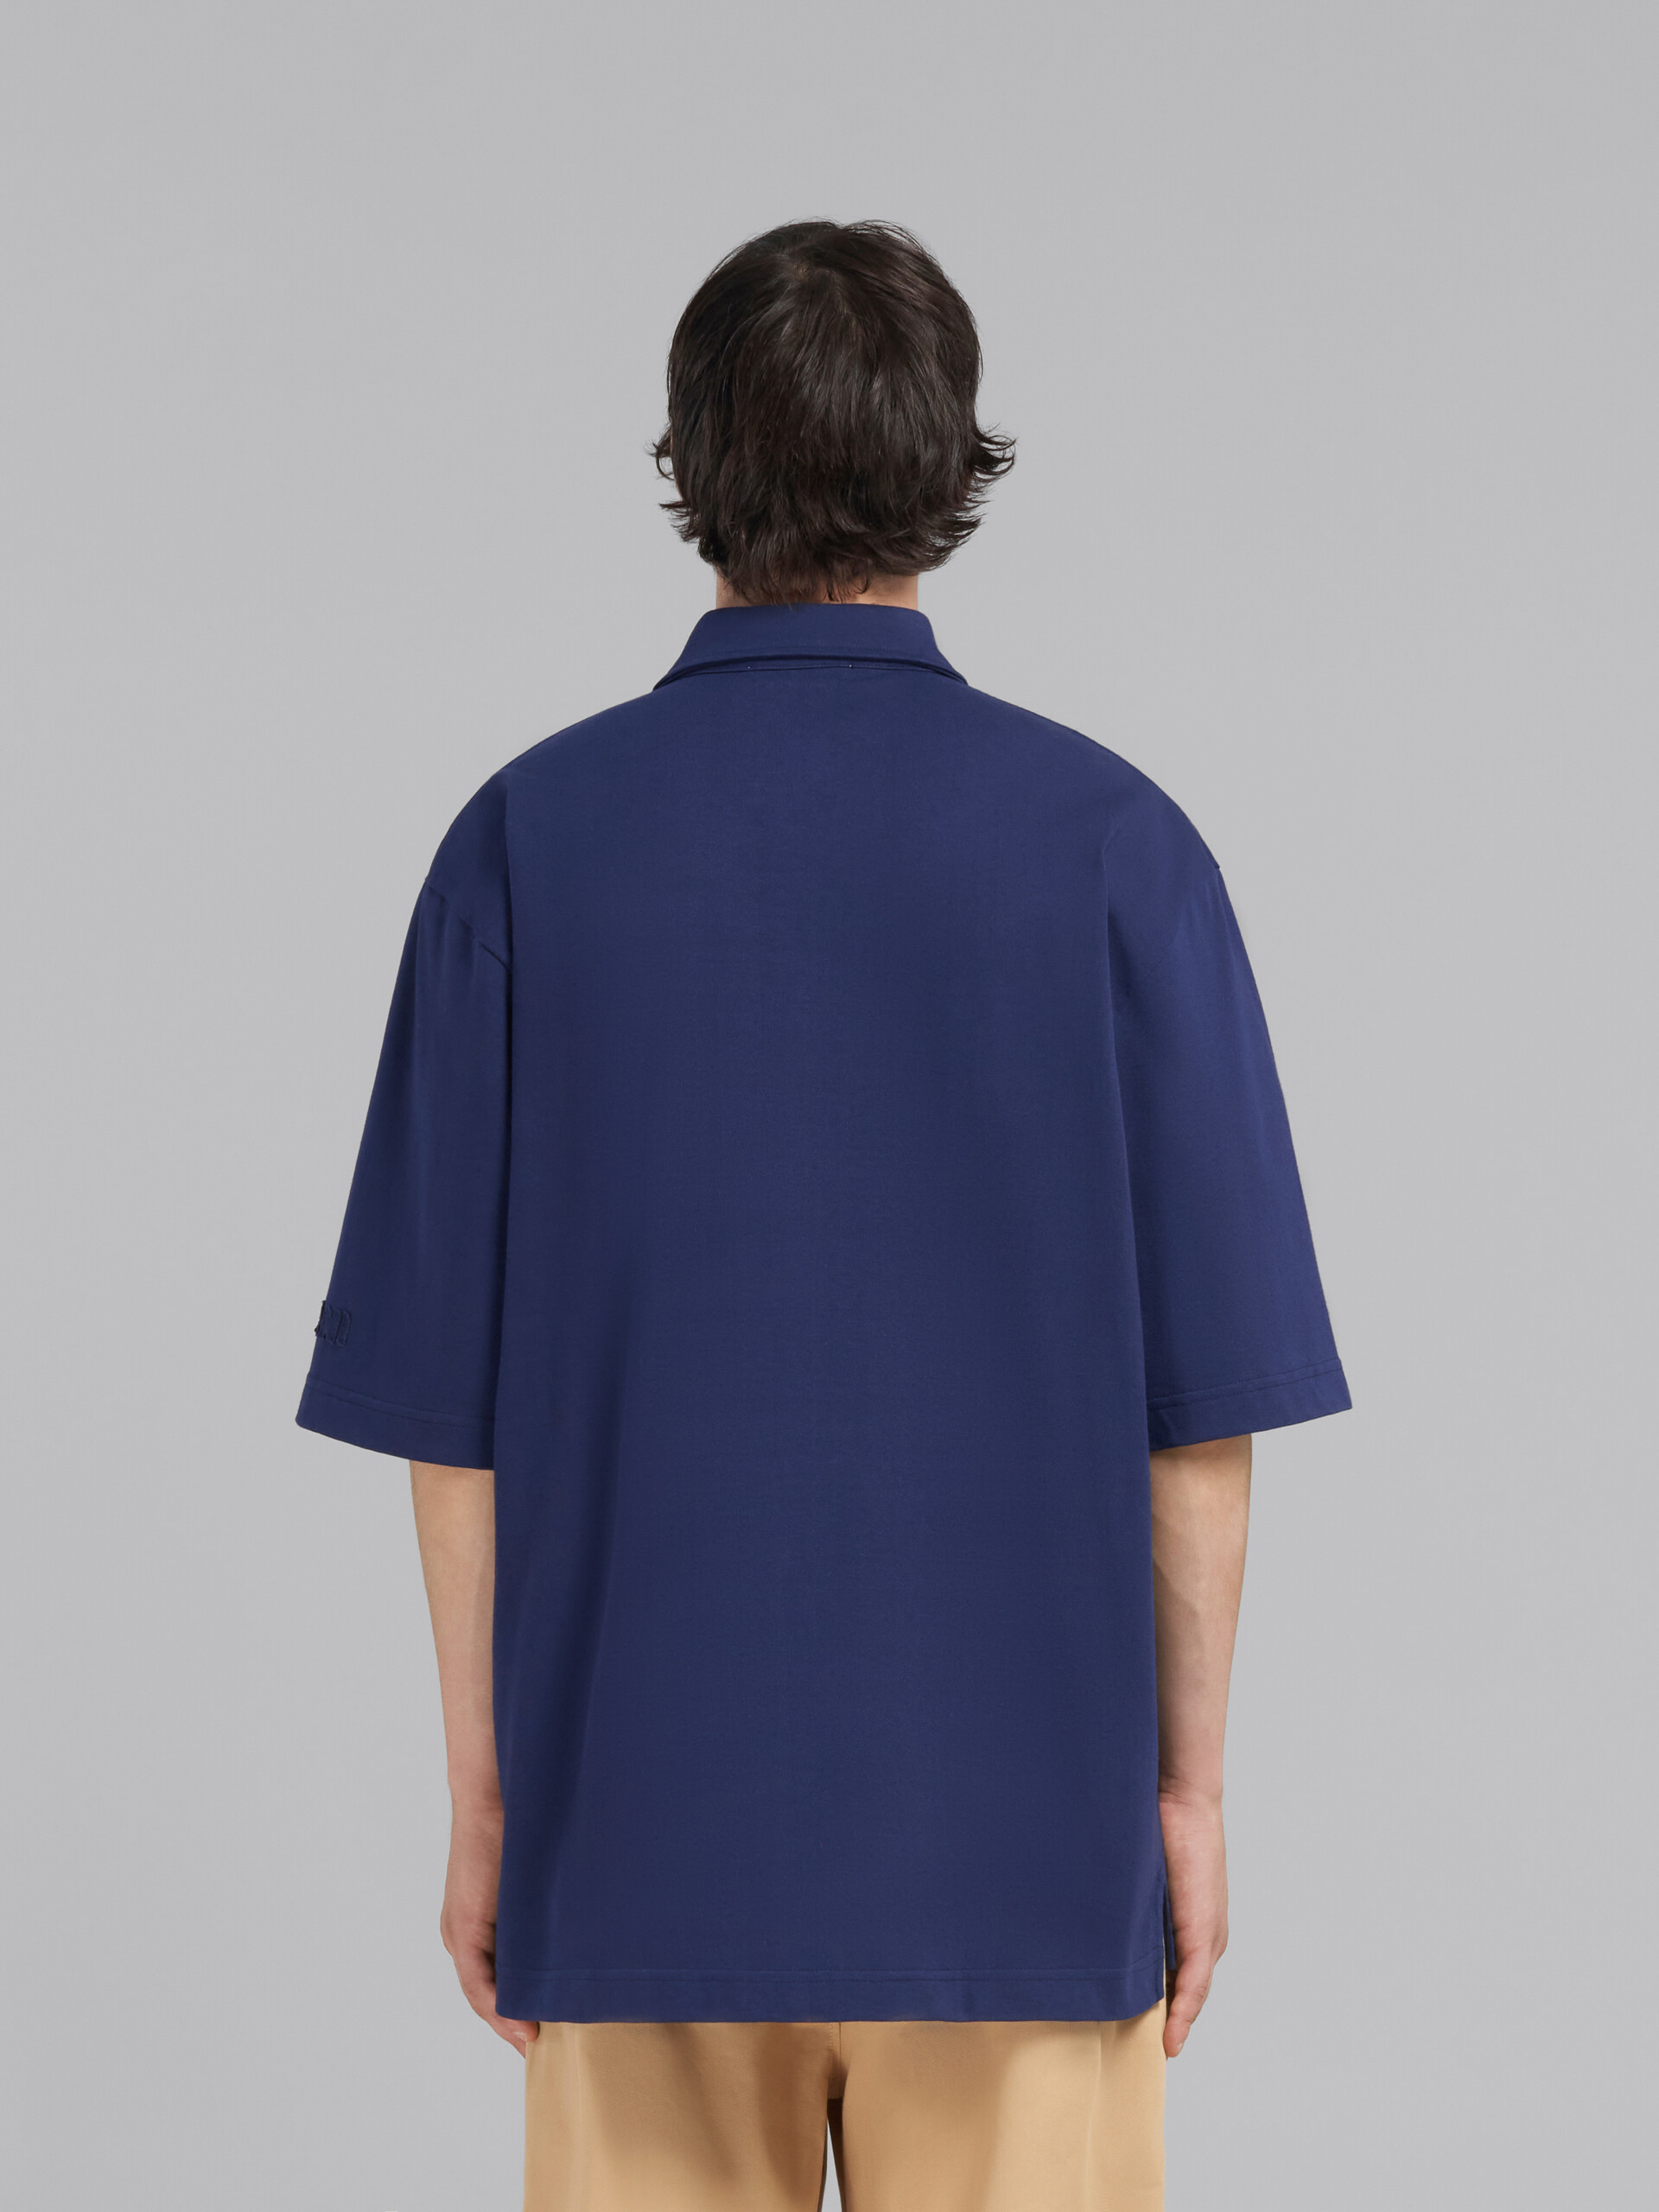 Blaues Oversize-Polohemd aus Bio-Baumwolle mit Marni-Aufnähern - Hemden - Image 3